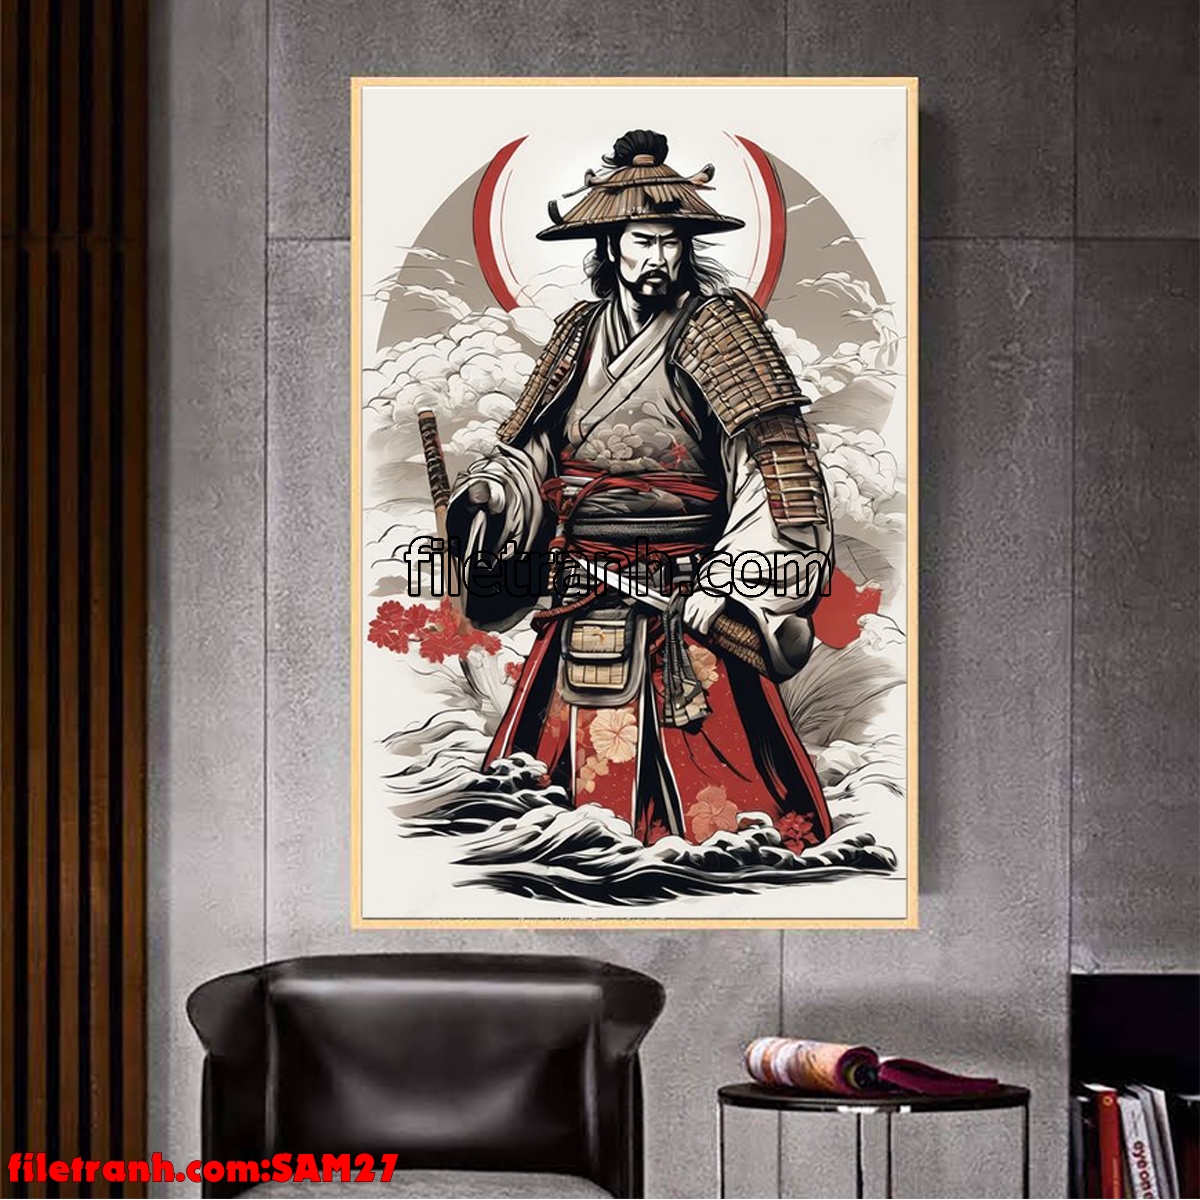 https://filetranh.com/samurai/file-tranh-samurai-vo-si-nhat-ban-sam27.html